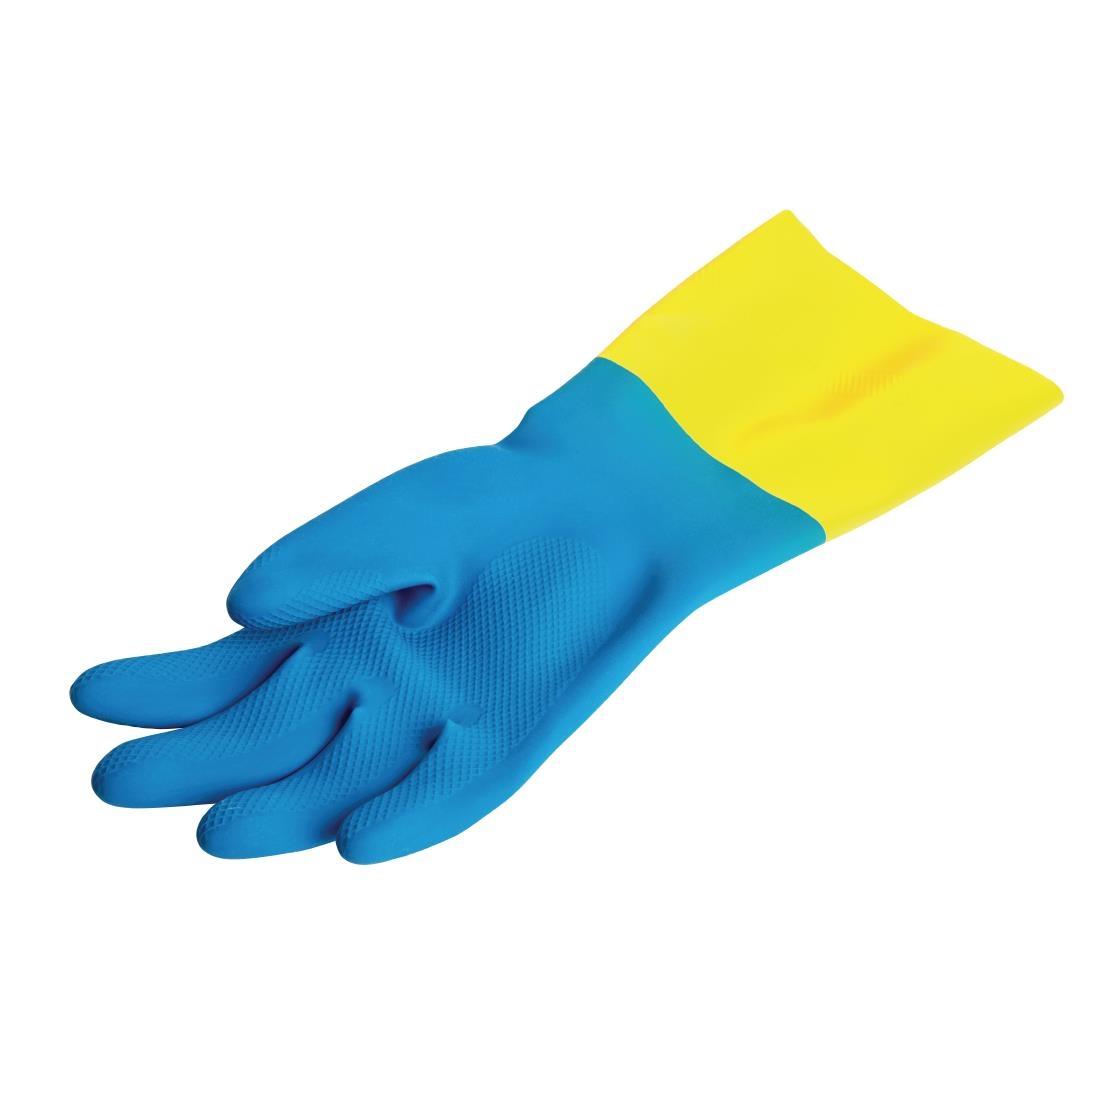 MAPA Alto 405 Liquid-Proof Heavy-Duty Janitorial Gloves Blue and Yellow Extra Large - FA296-XL  - 4